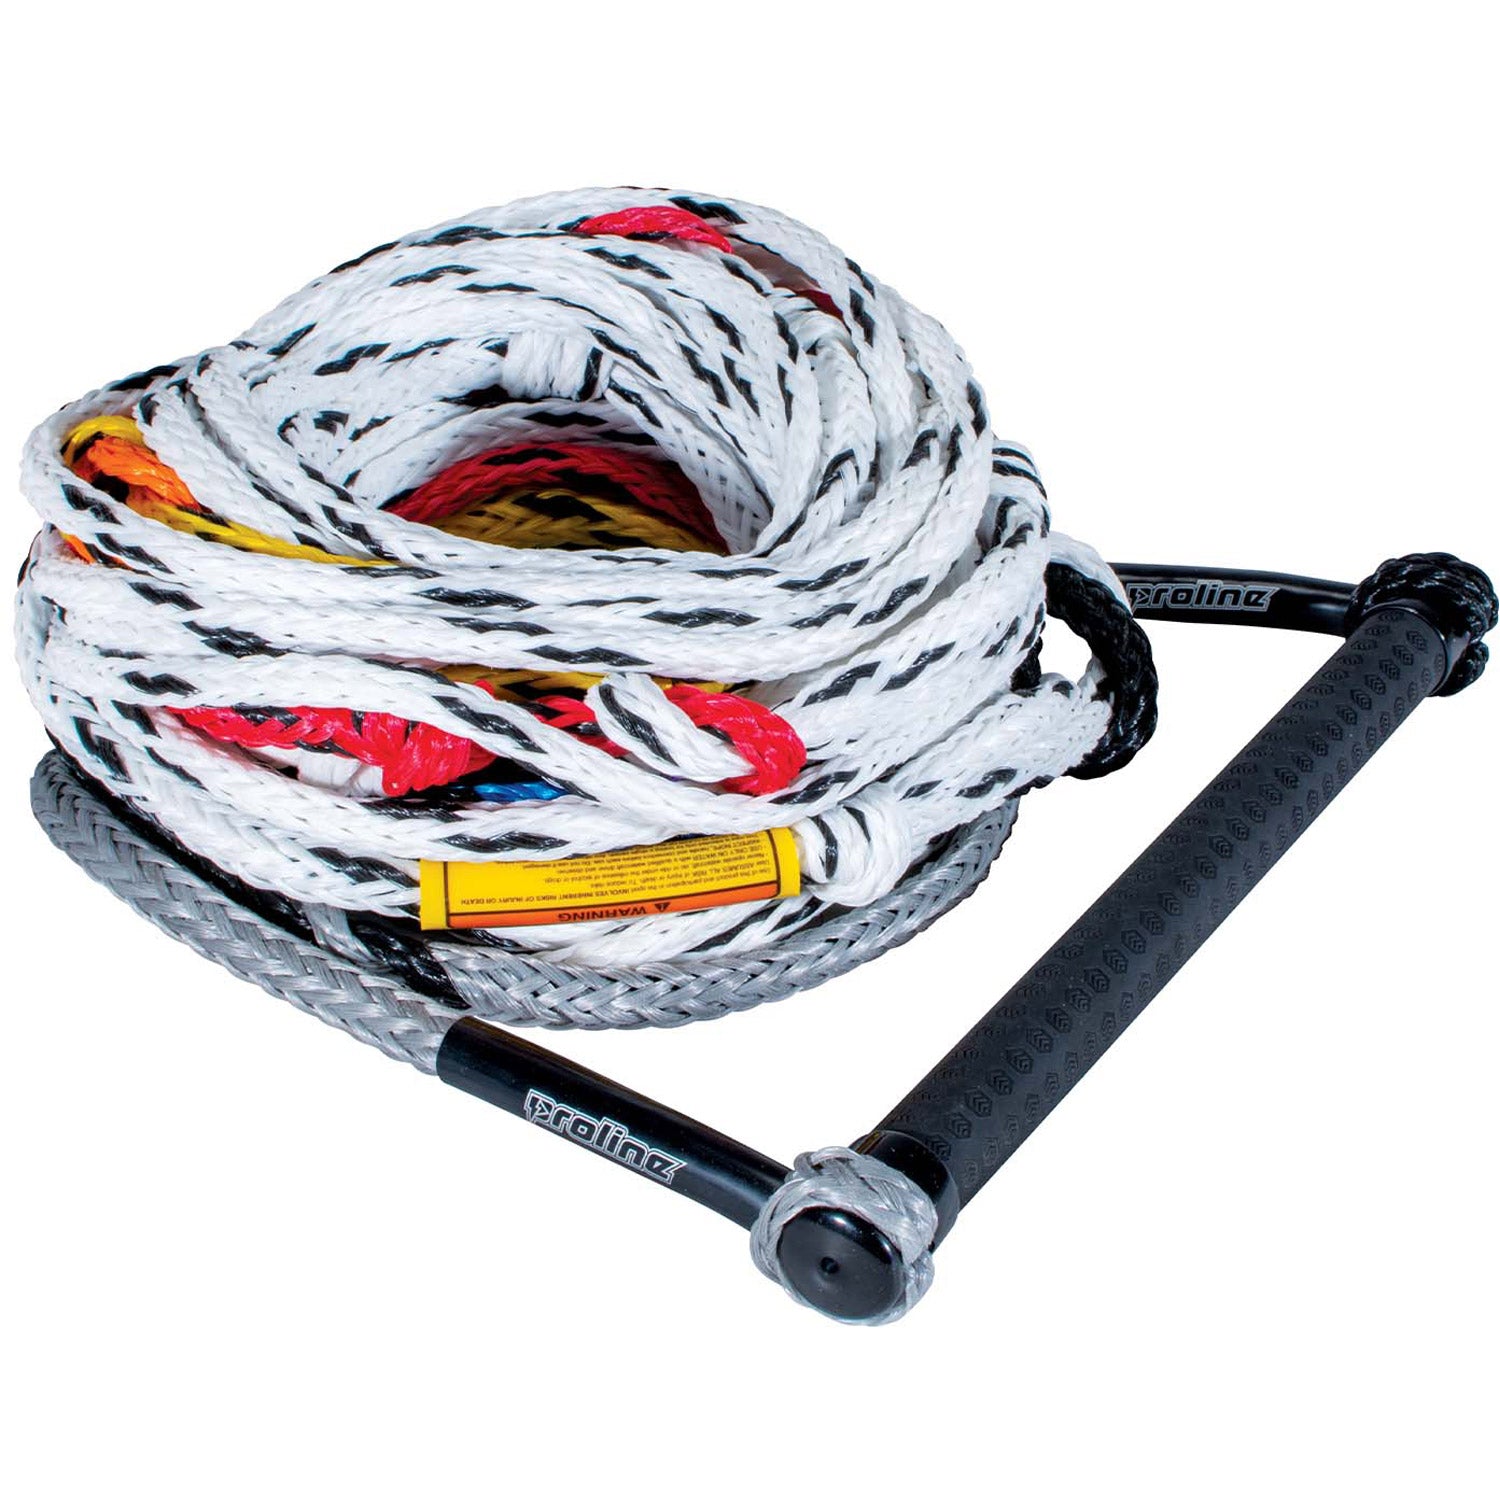 Laser Straight Ski Rope Package